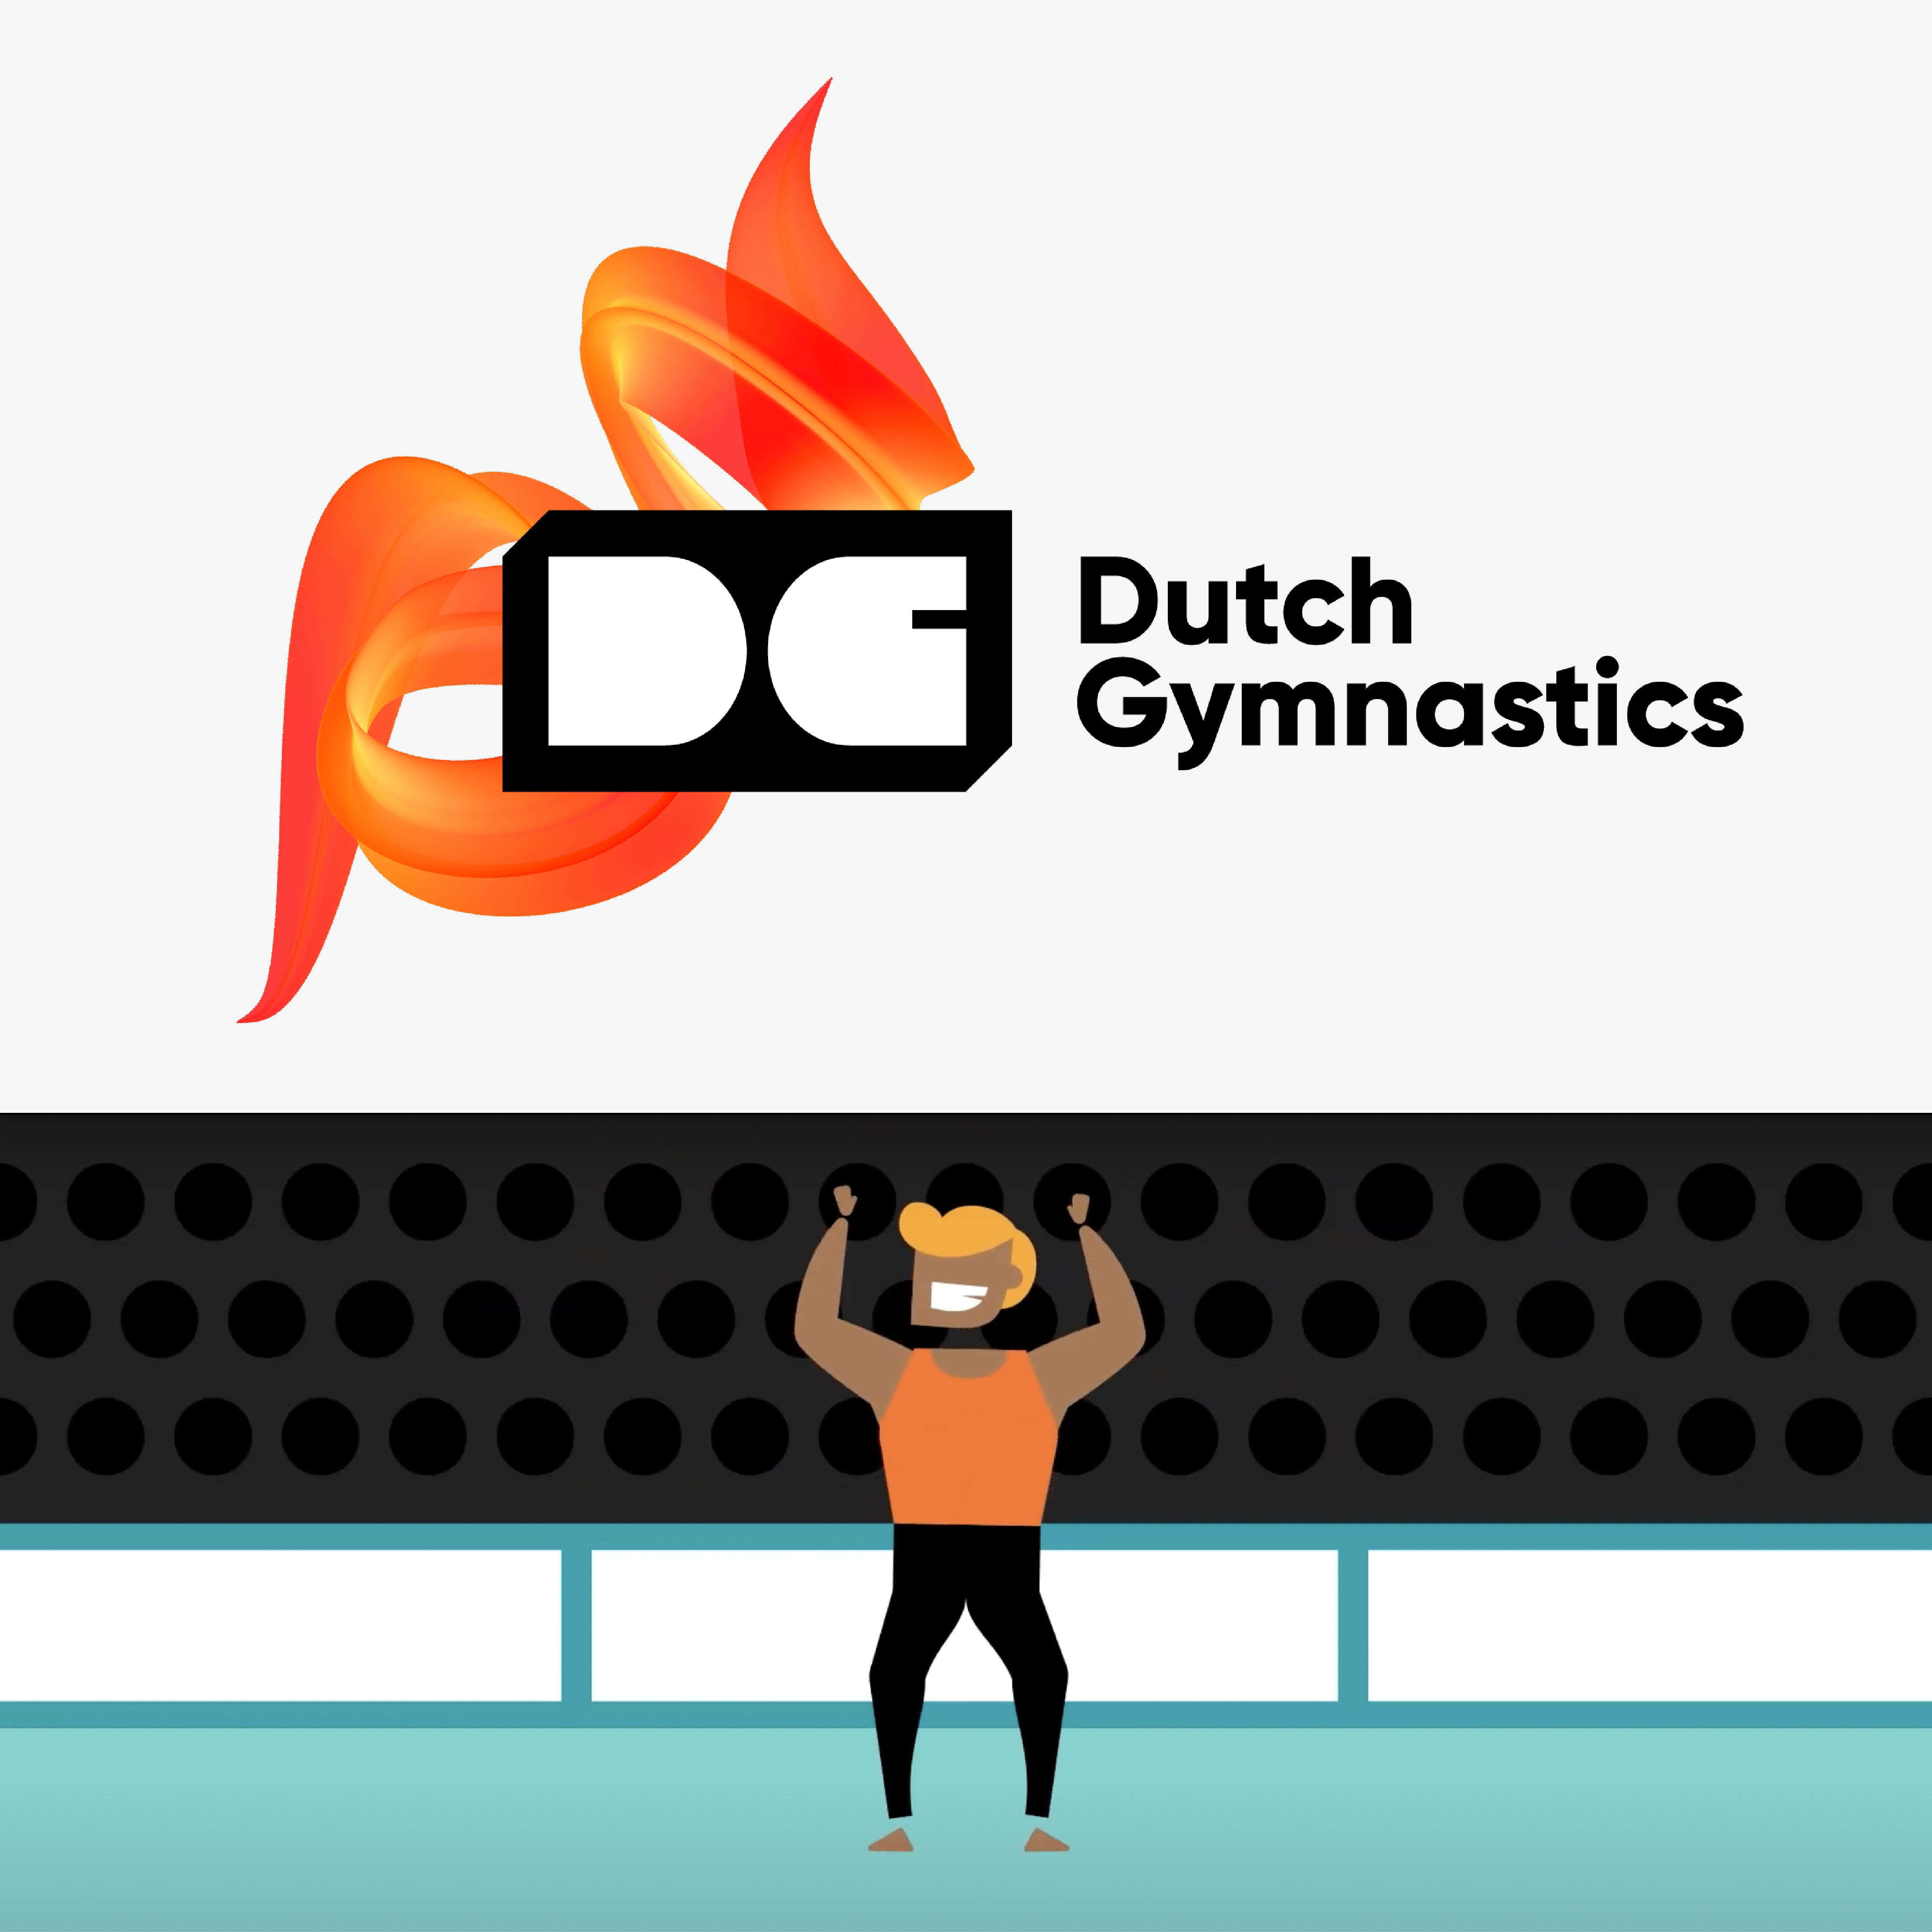 Dutch Gymnastics